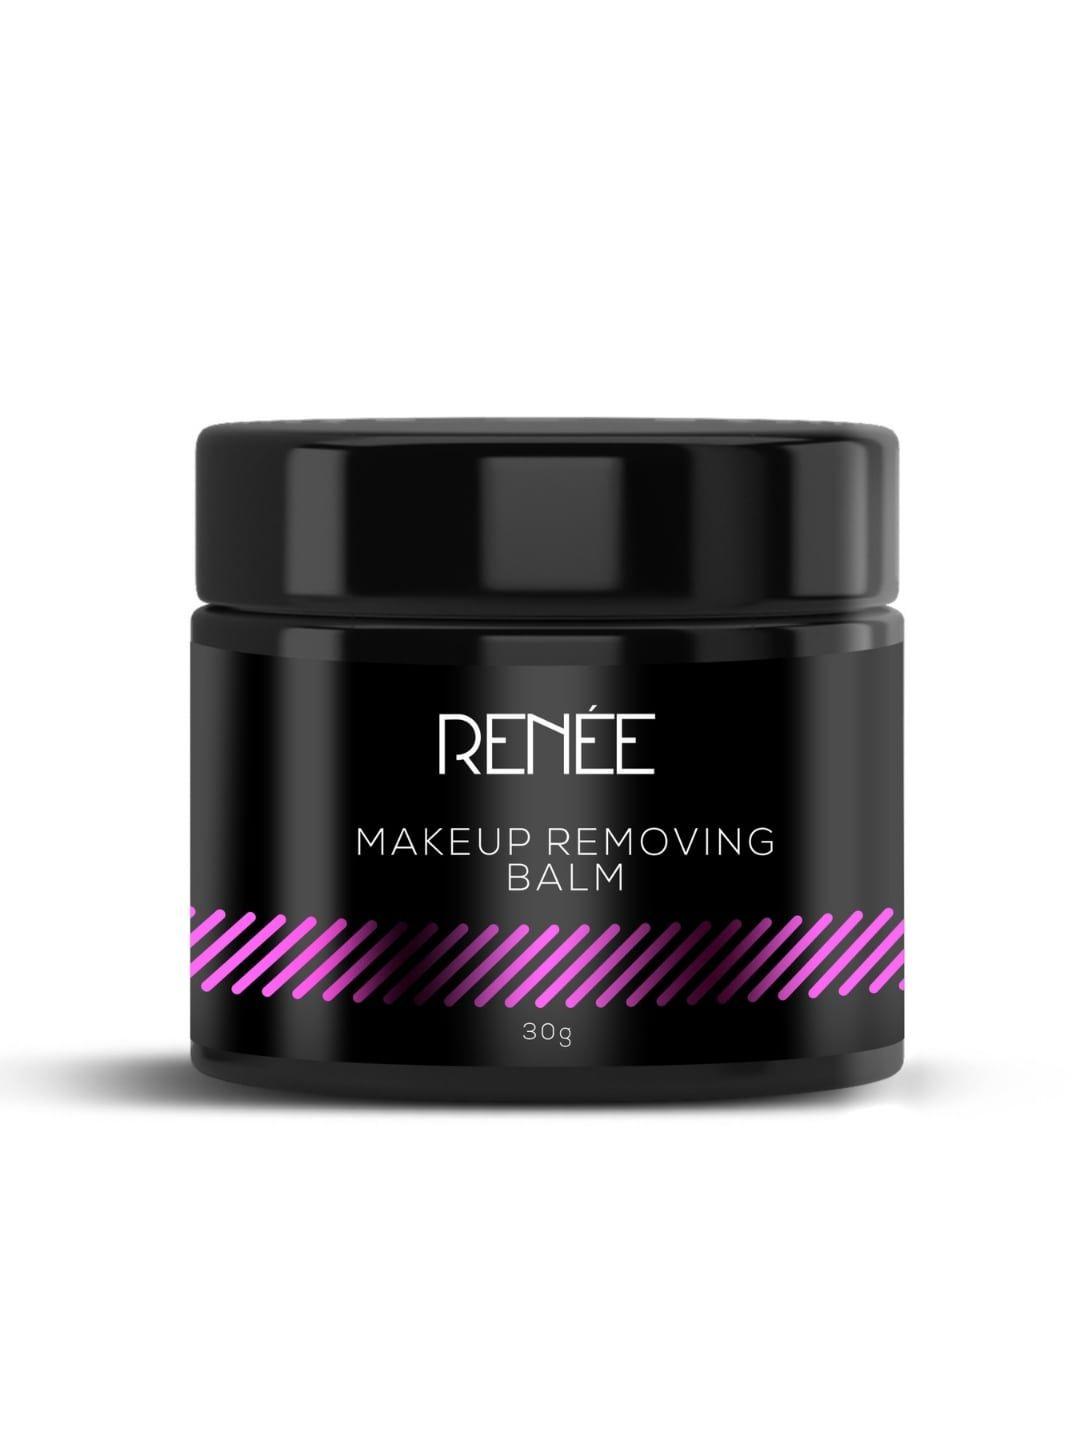 renee makeup removing balm 30g